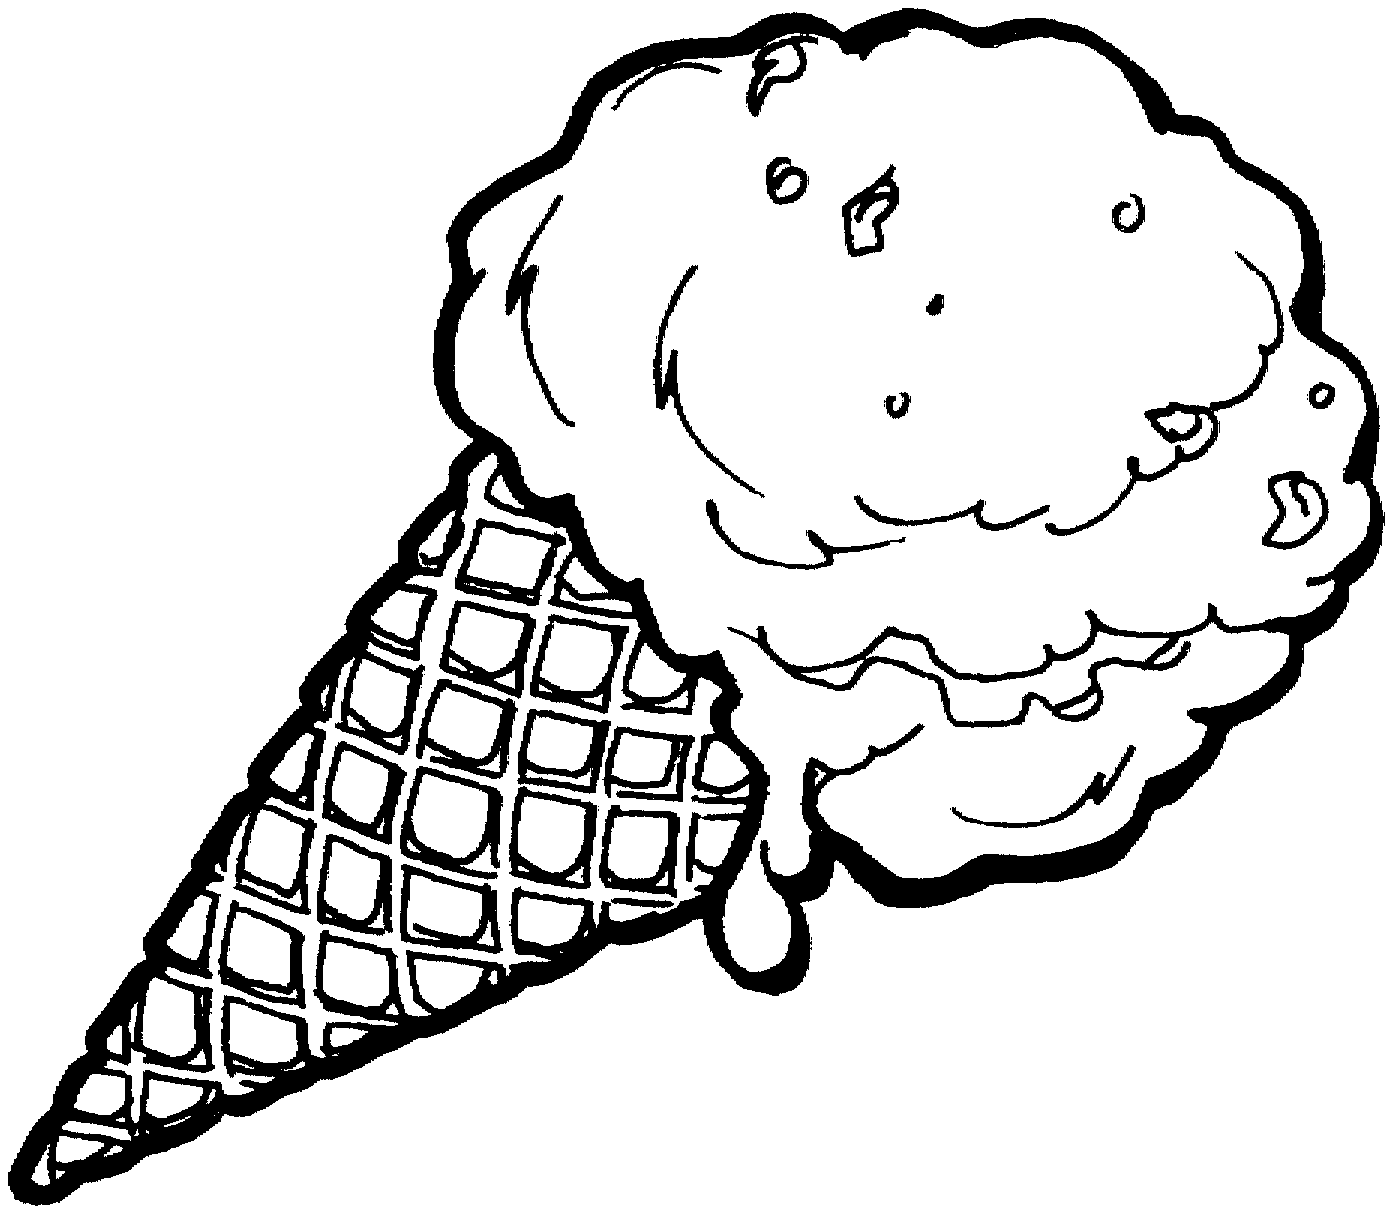 ice cream cone outline clip art - photo #43